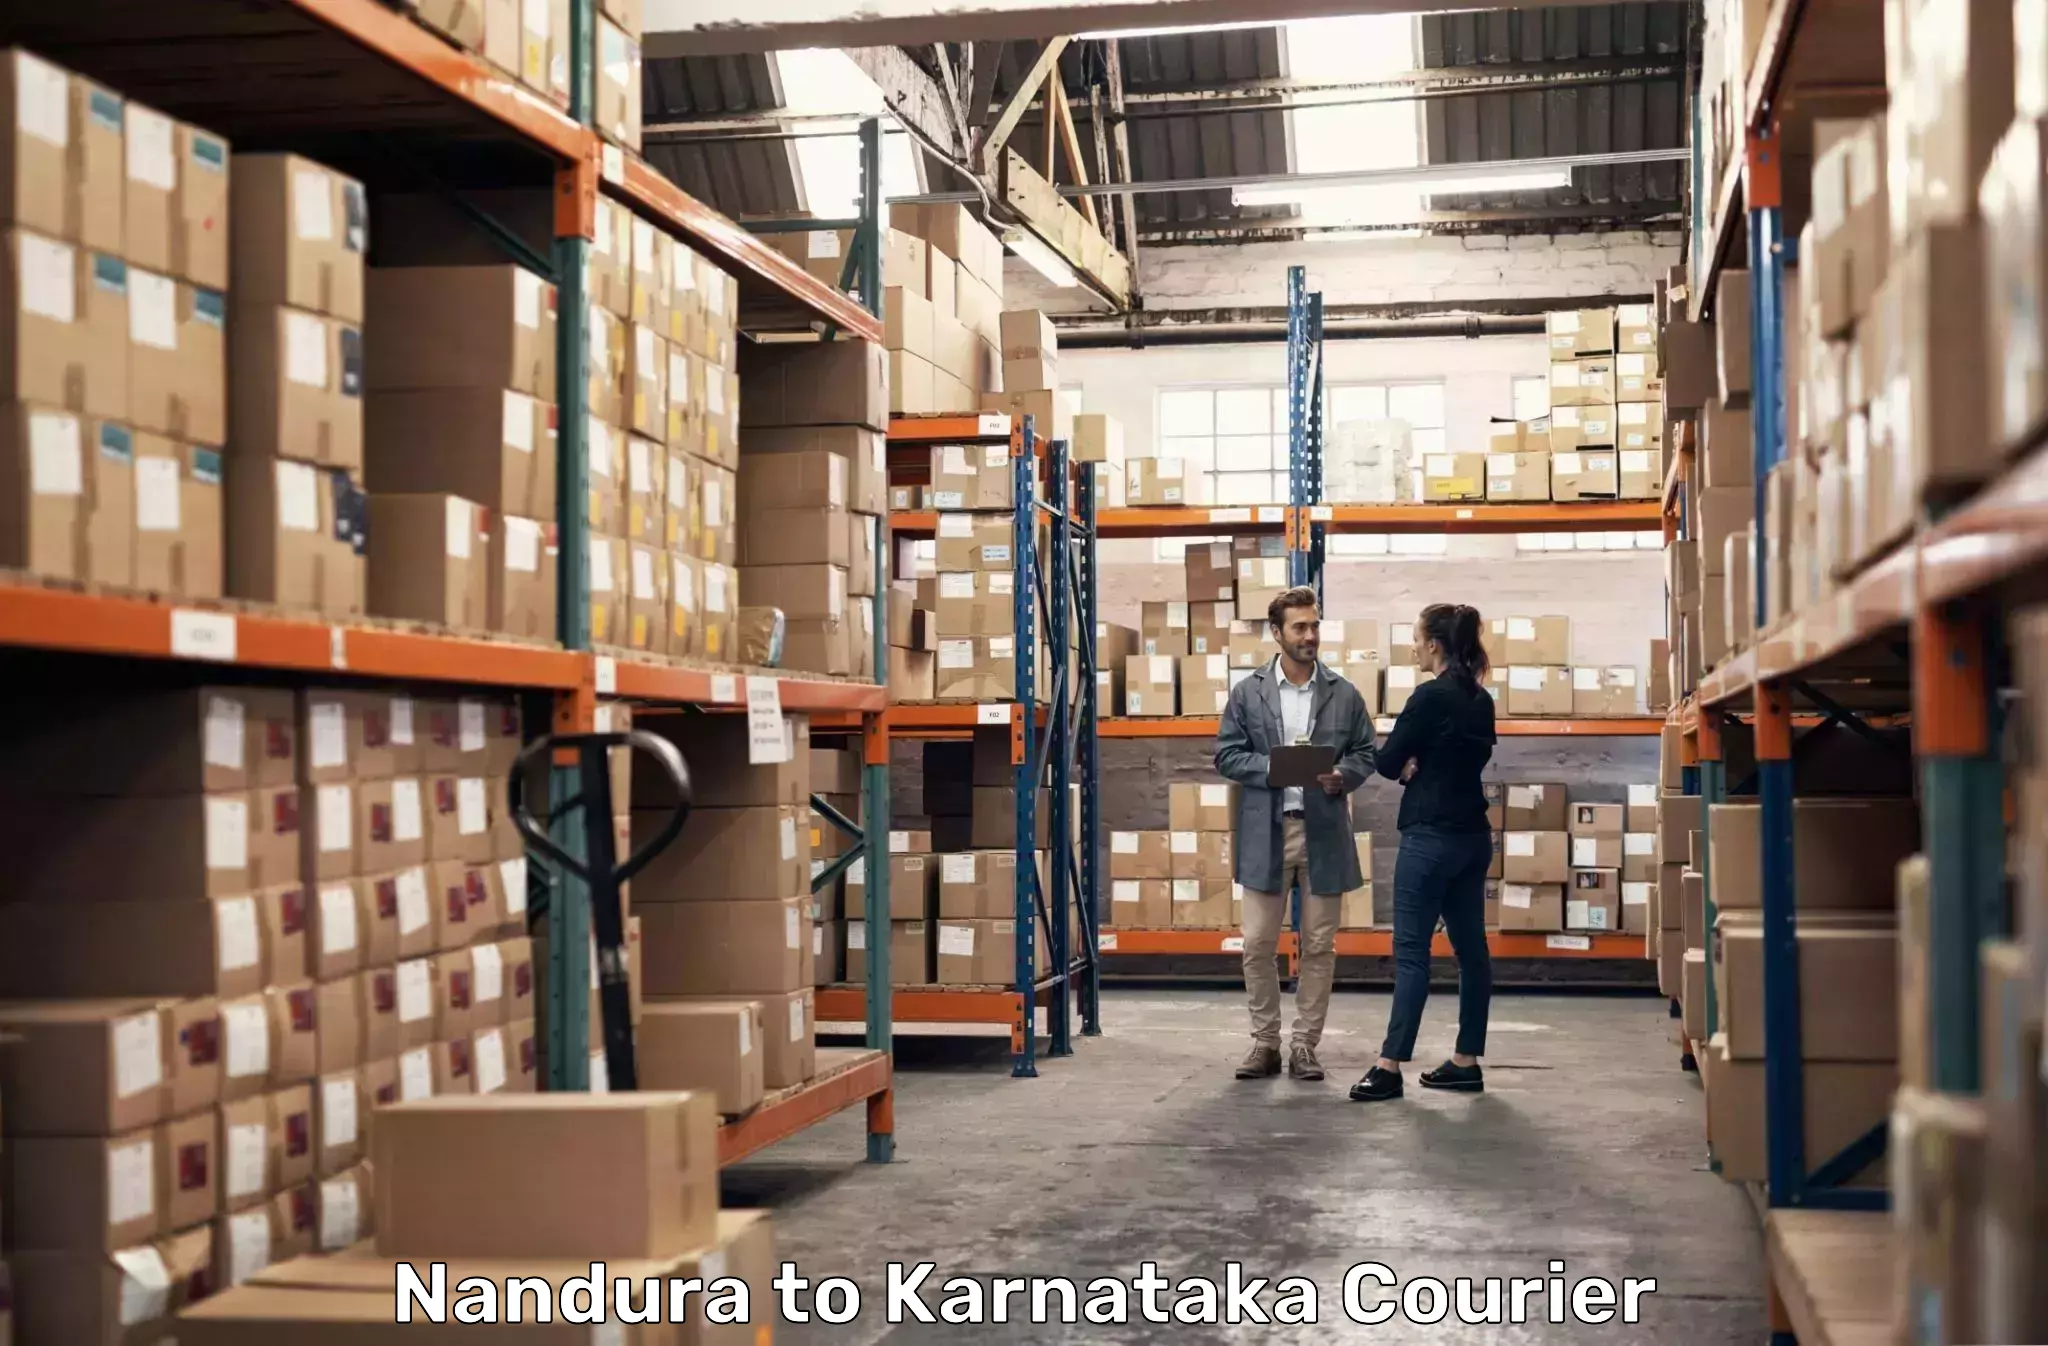 Express delivery capabilities Nandura to Karnataka